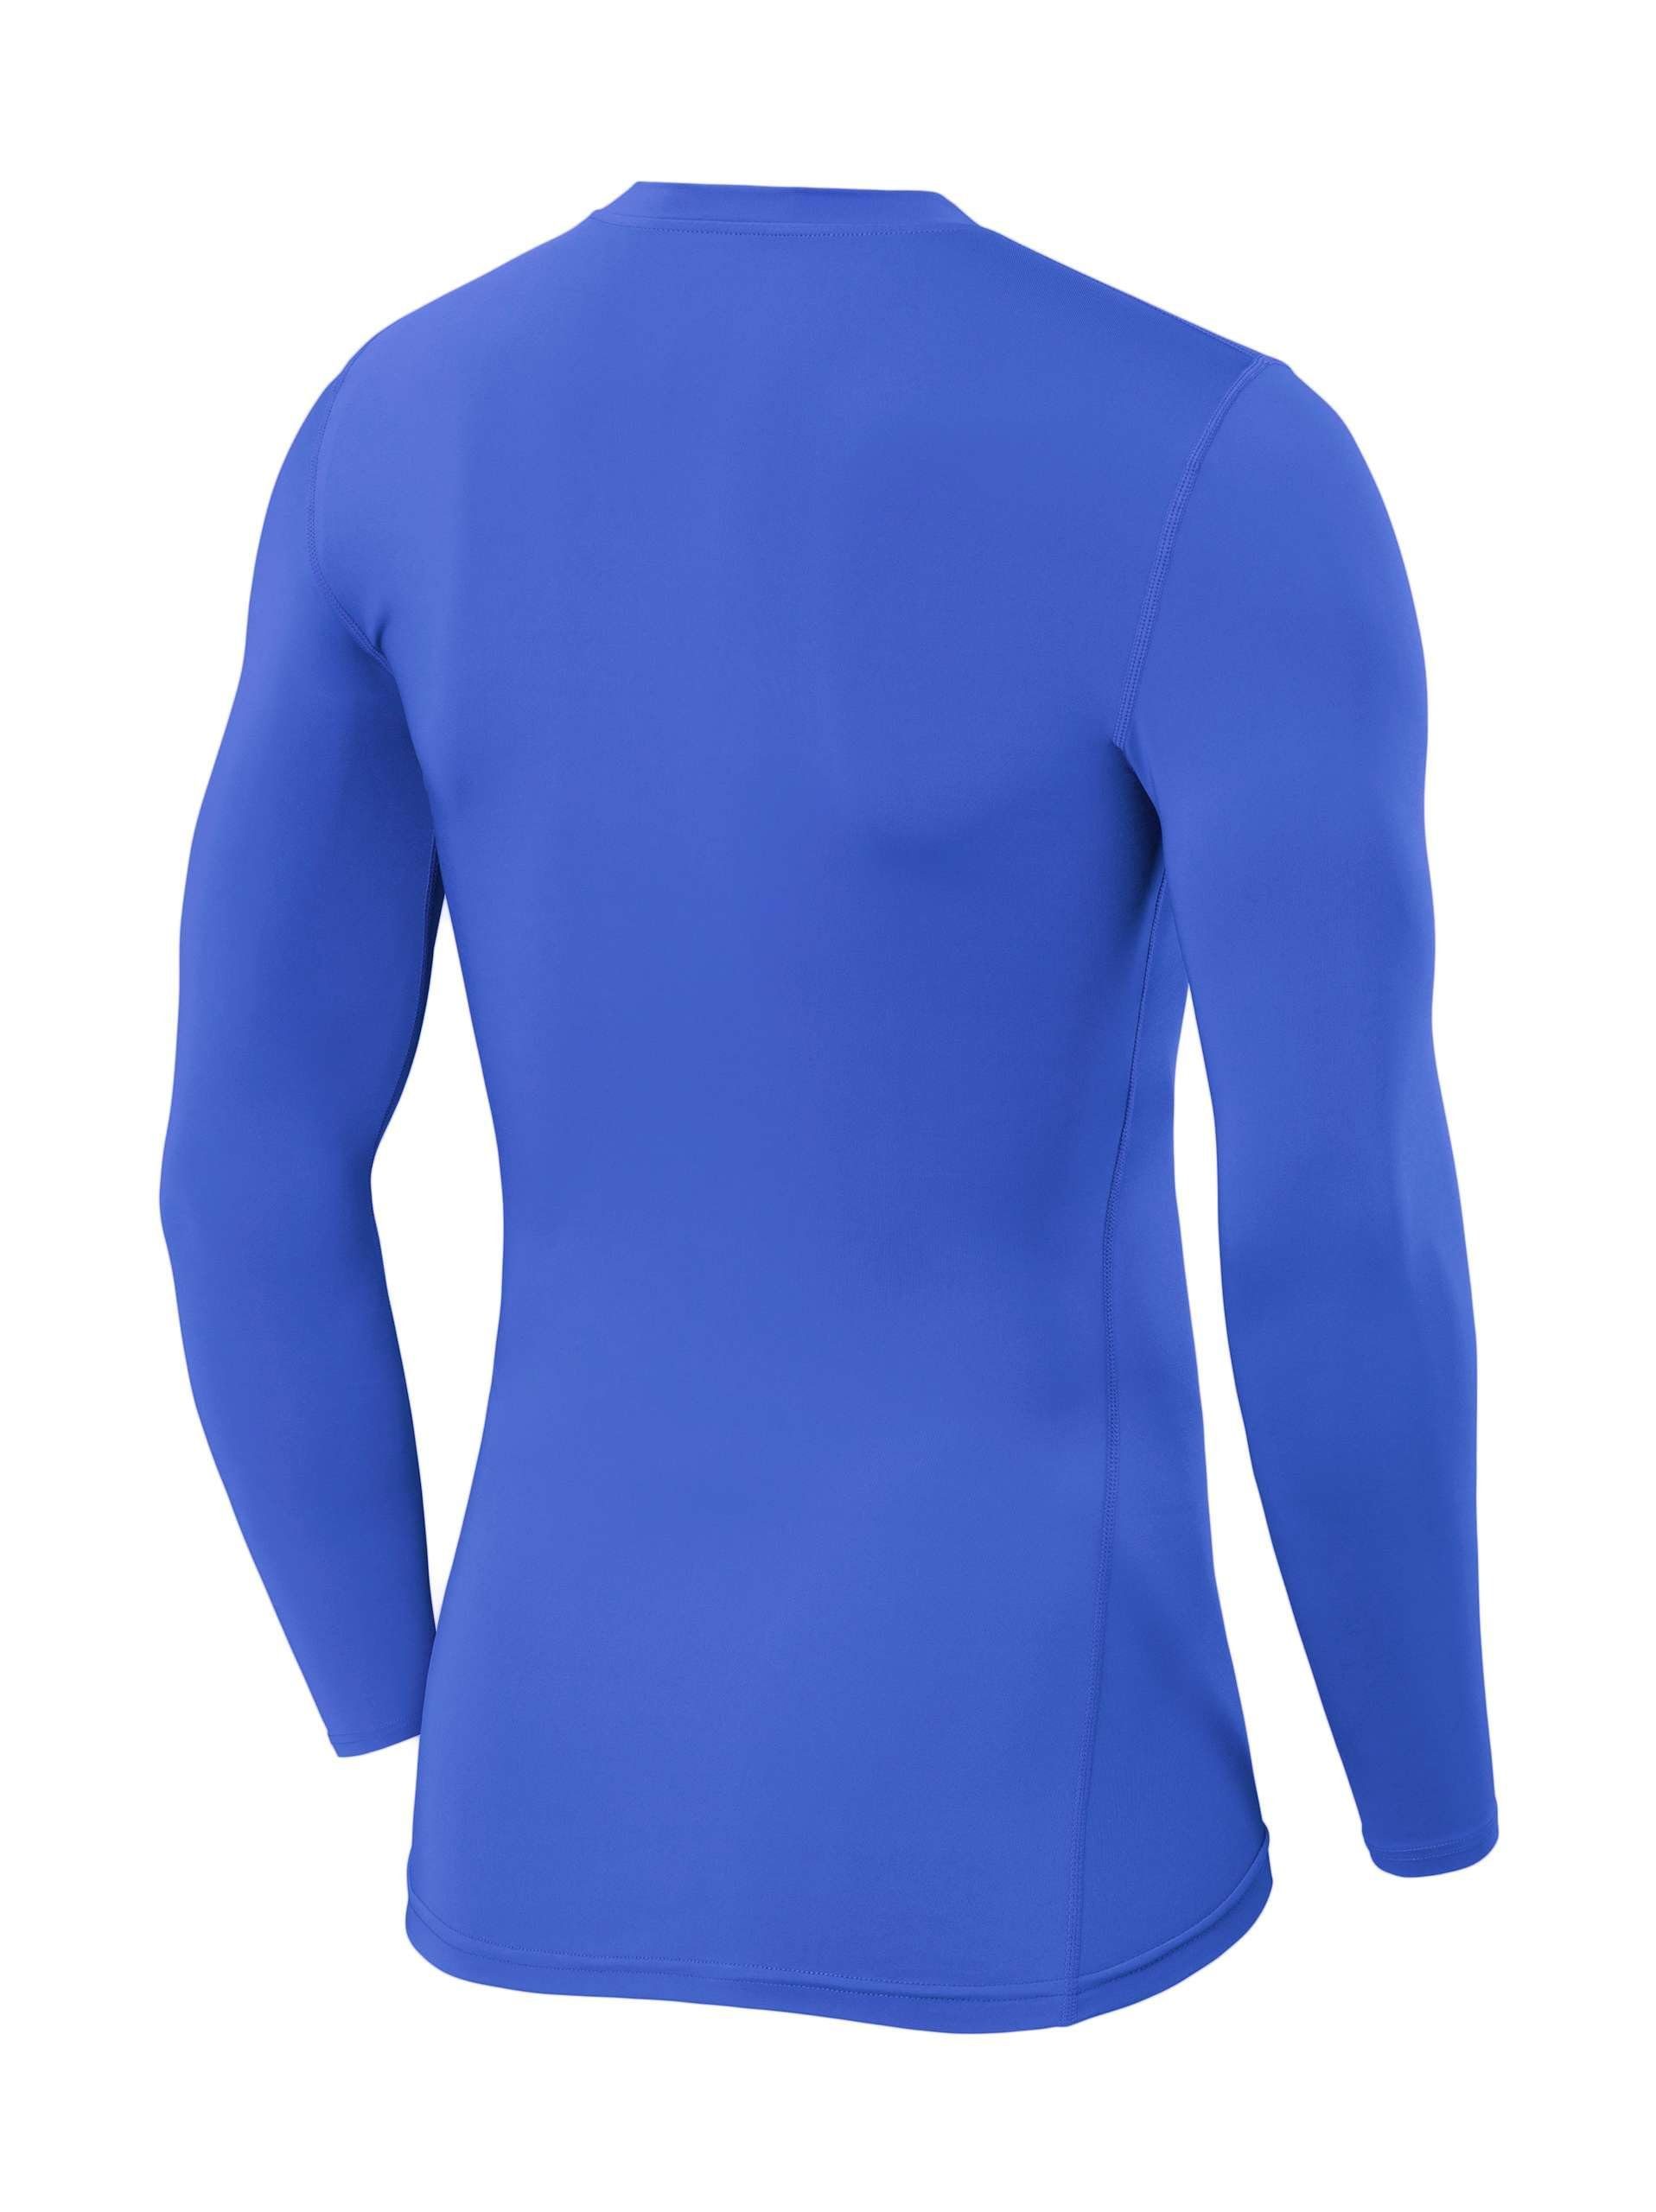 PowerLayer Shirt Rundhalsausschnitt Langarmshirt Blau Herren POWERLAYER XS Kompressions